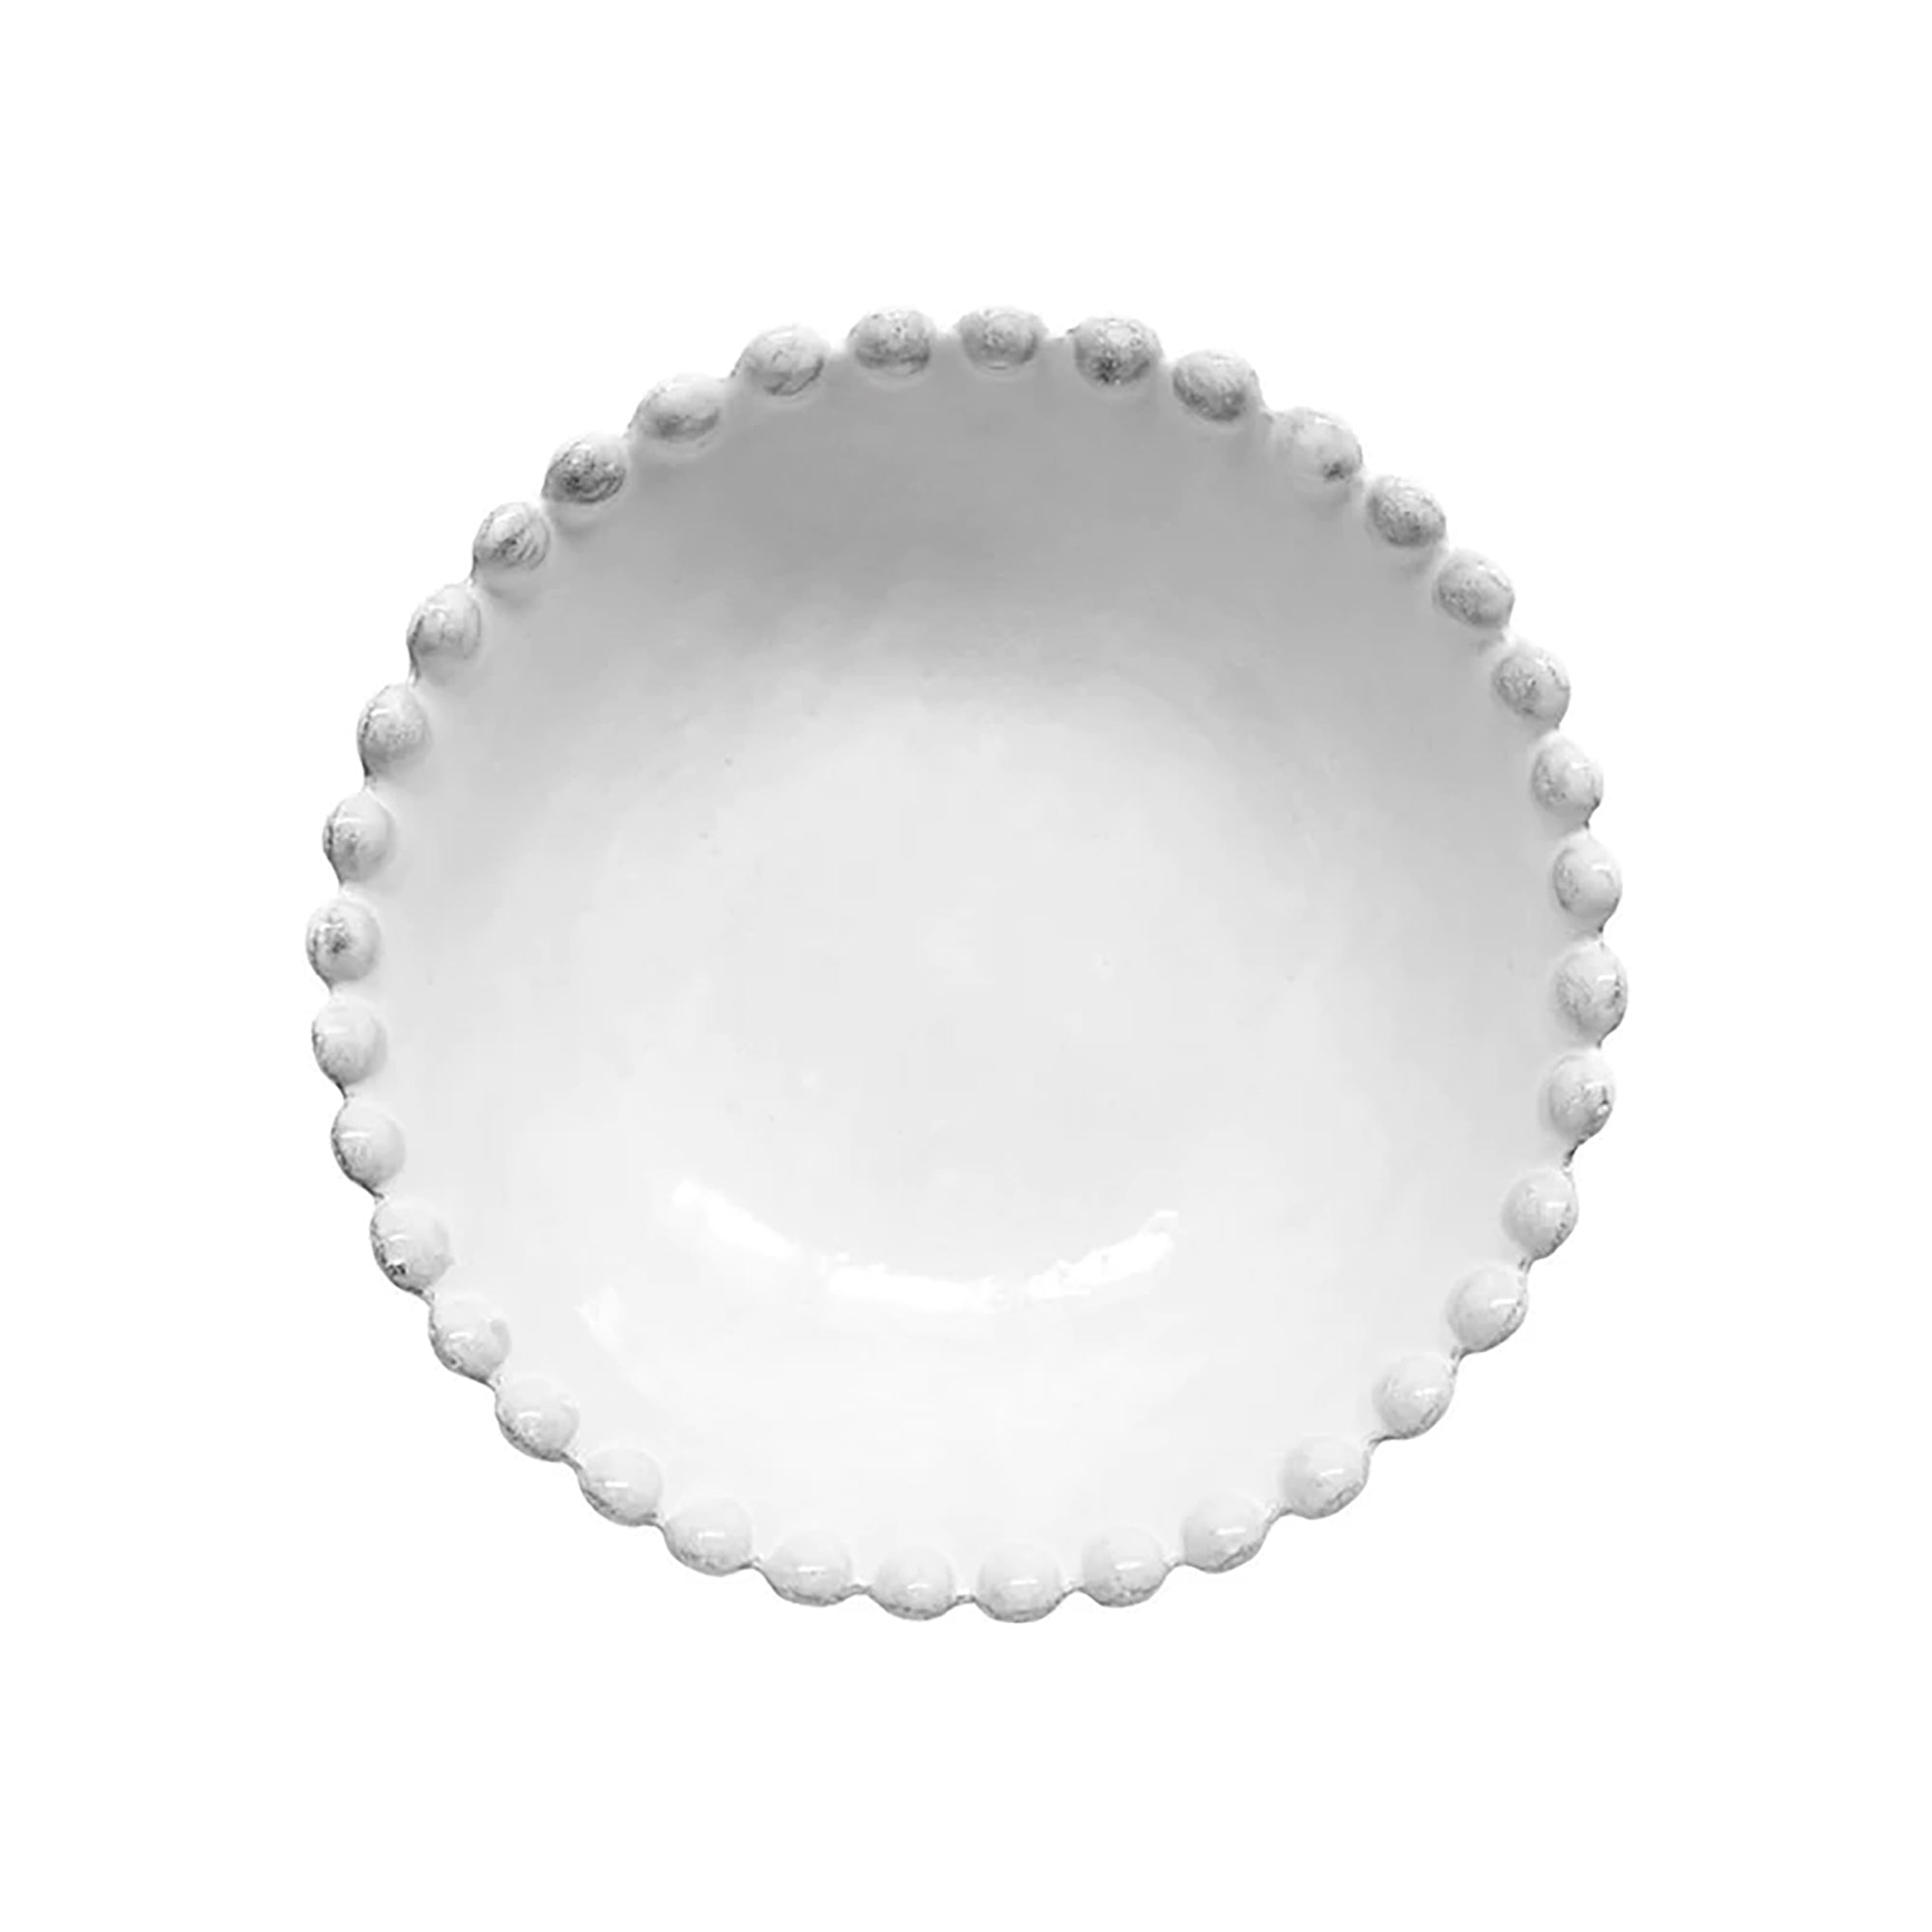 【 ASTIER DE VILLATTE / アスティエ・ド・ヴィラット 】 / Adelaide Small Soup Plate  スモールスーププレート